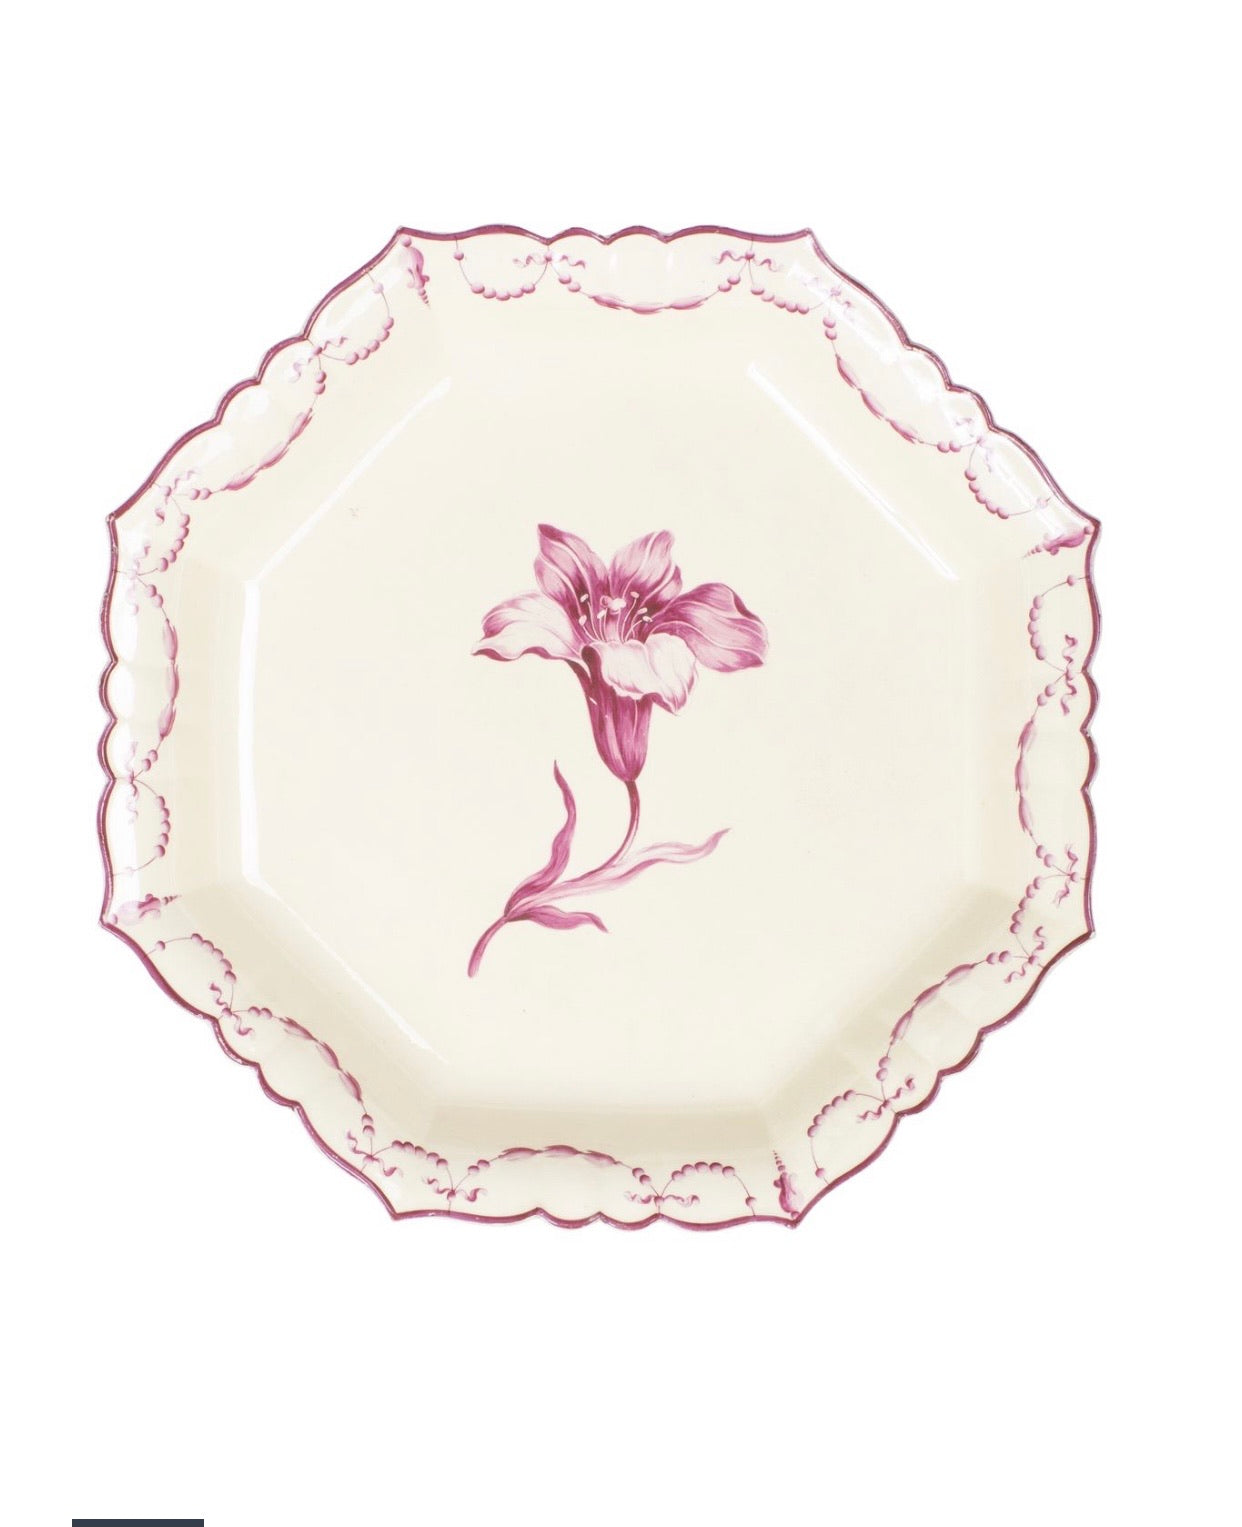 Antique Wedgwood Creamware Plate